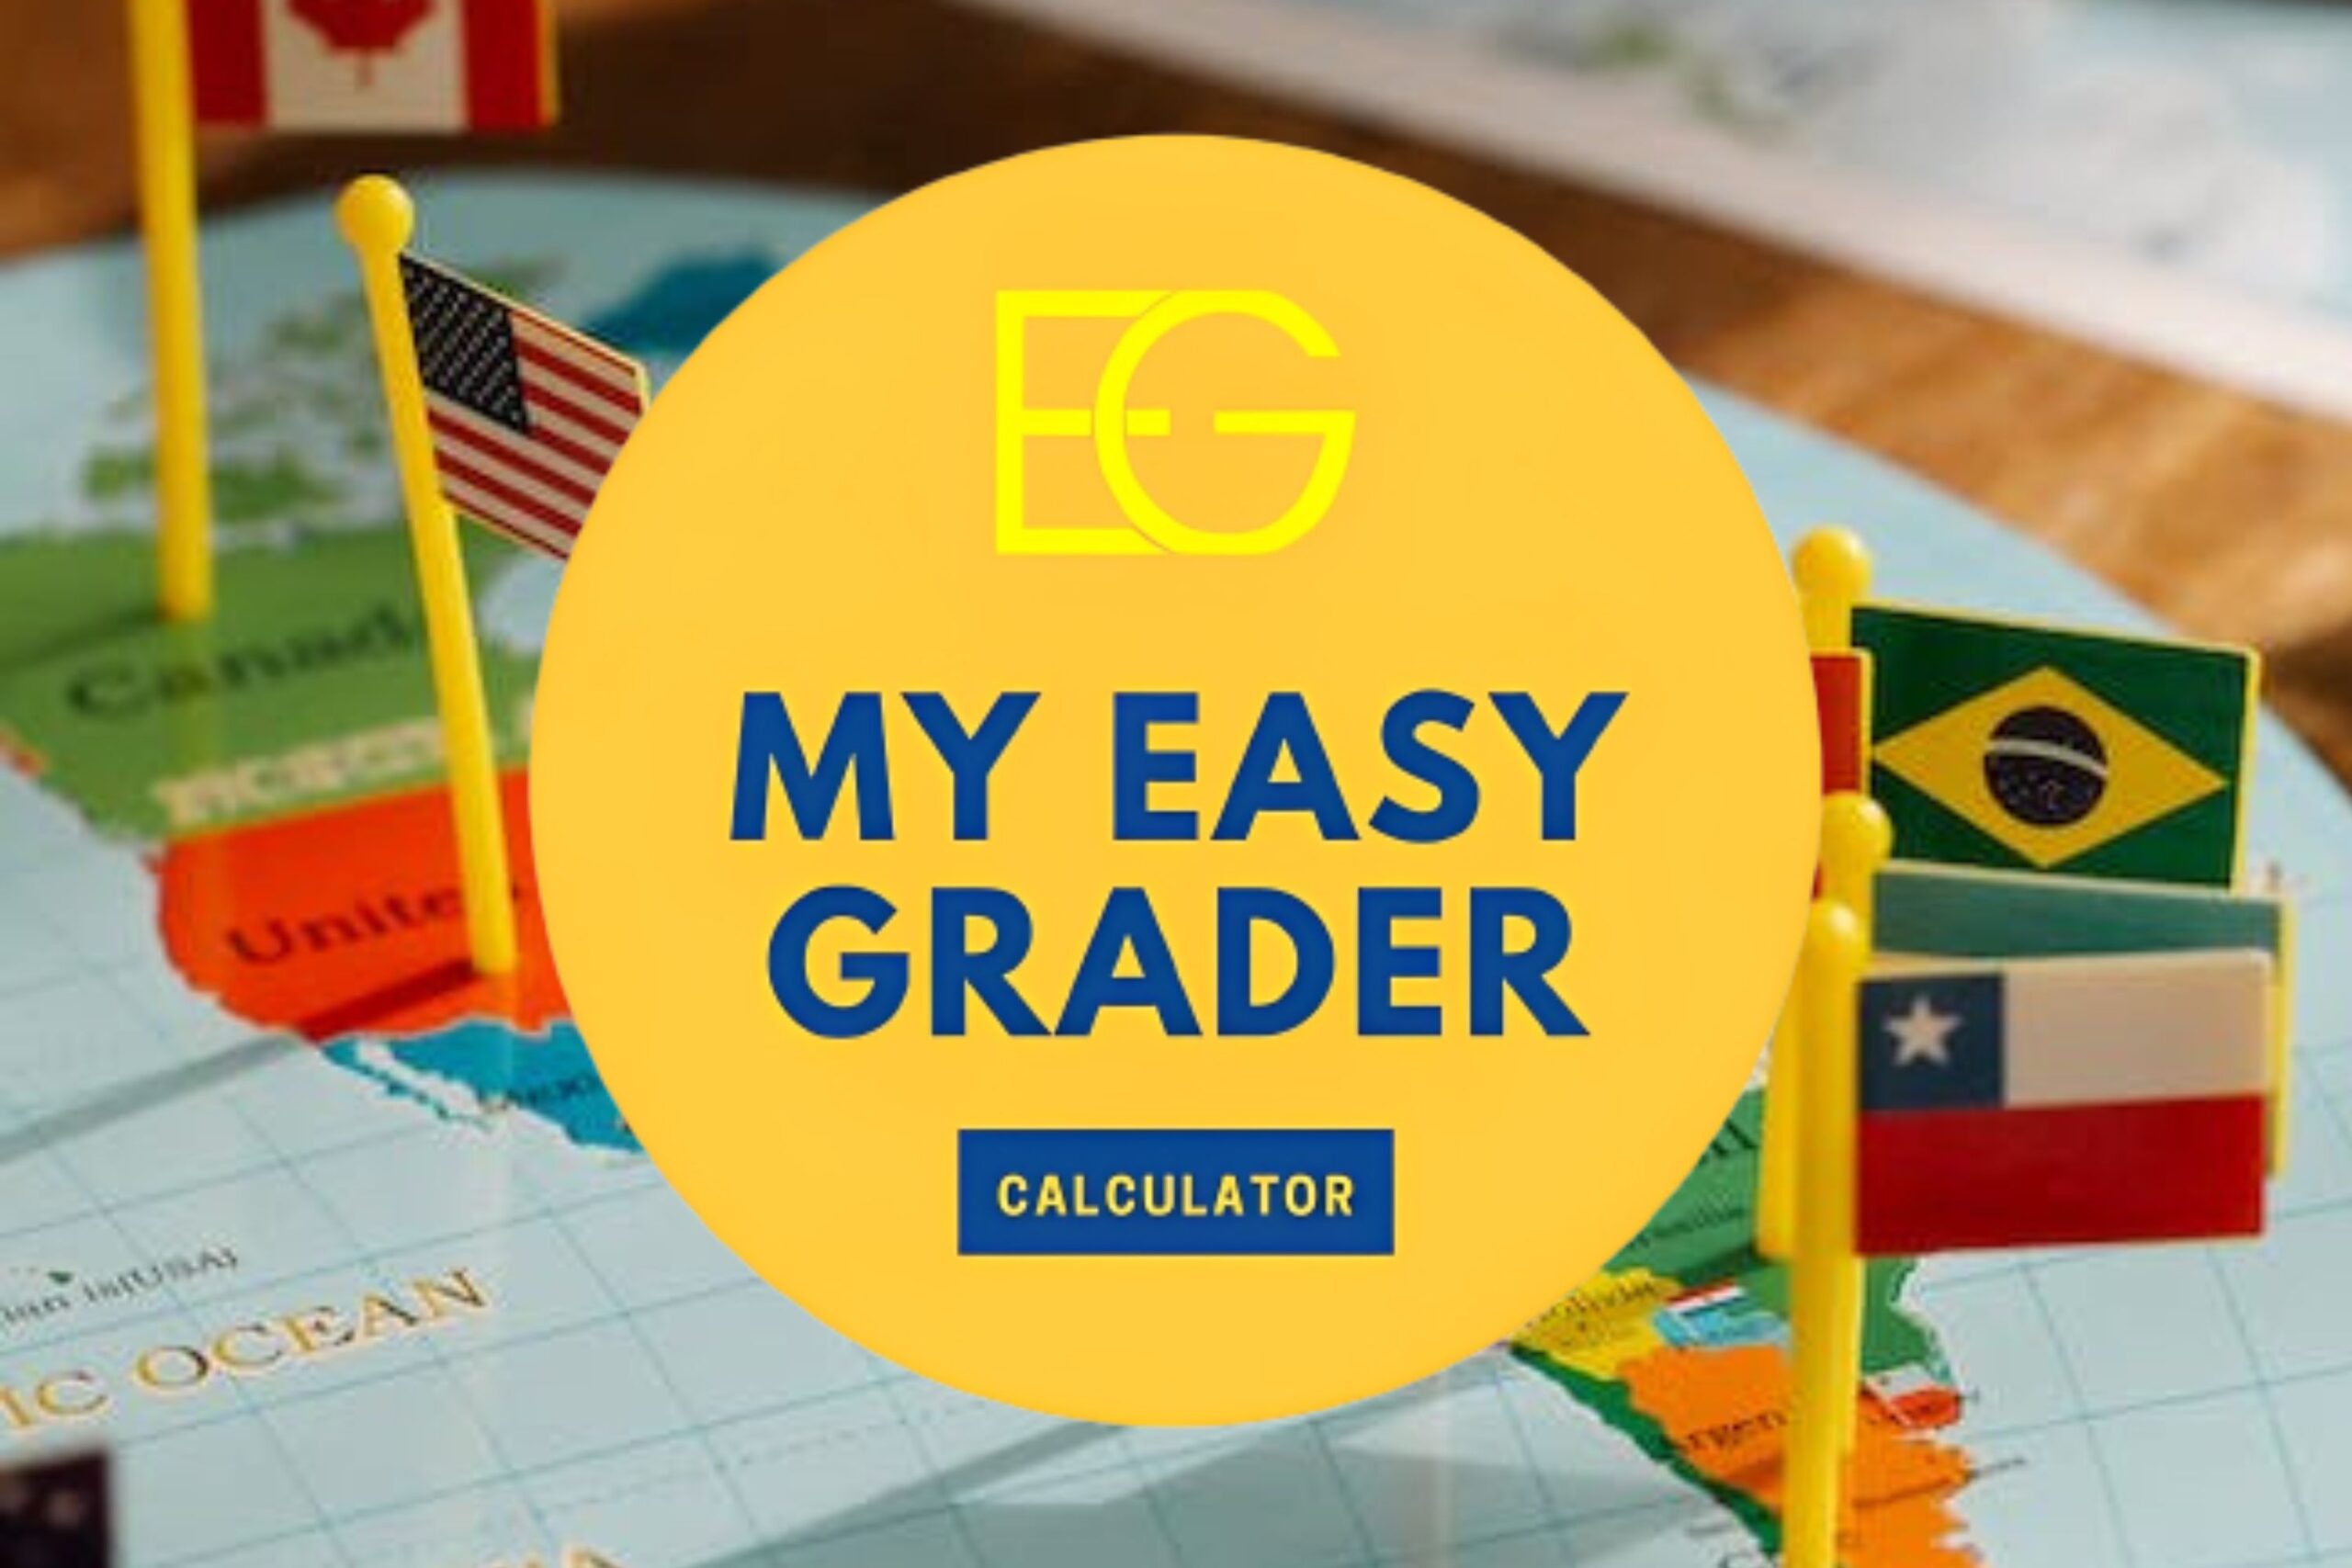 My Easy Grader Calculator for Grading Cultural Studies – No. 1 App